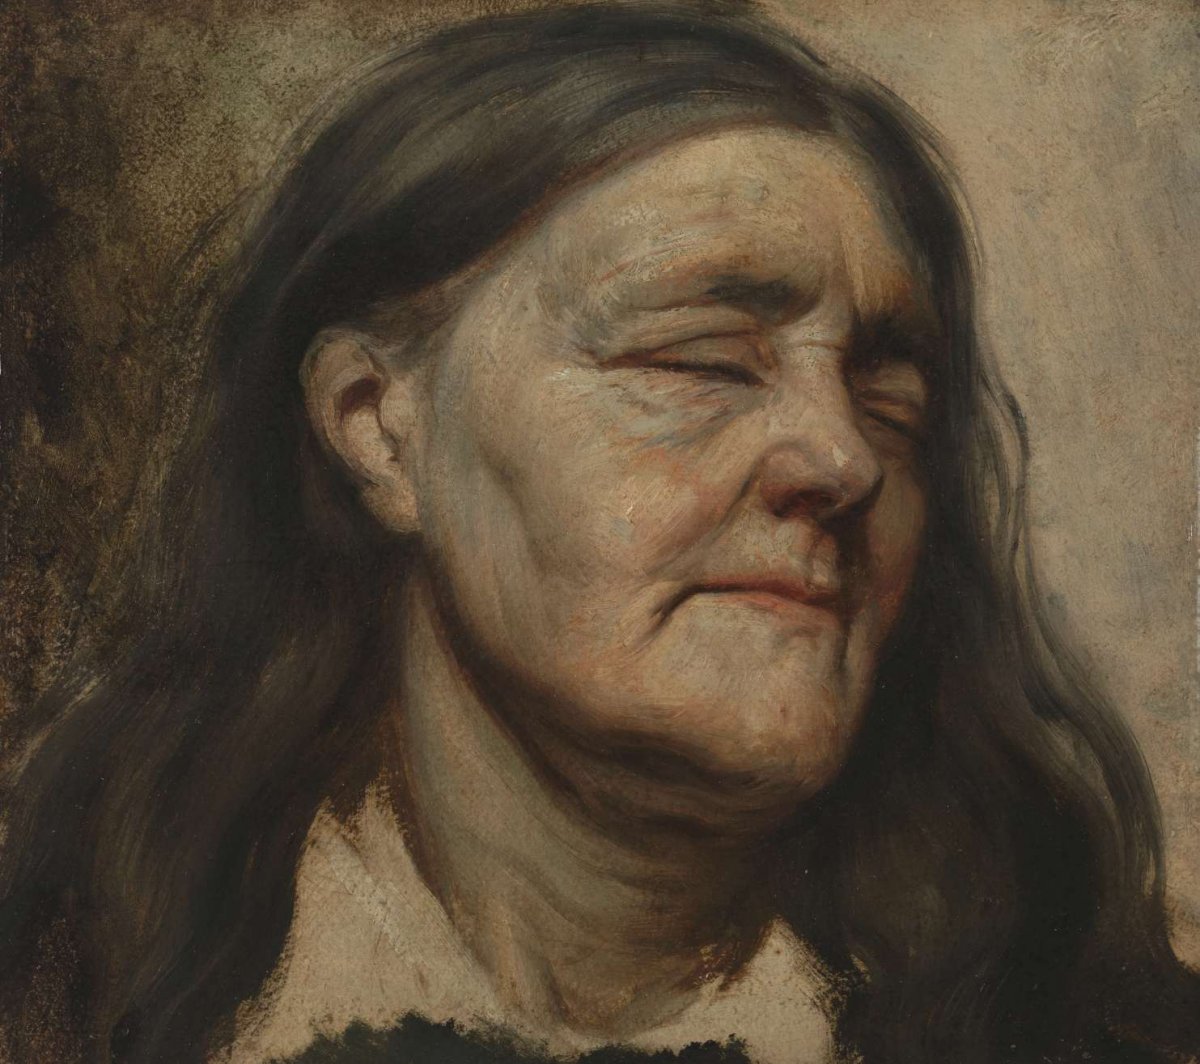 Study of an Old Woman, Matthijs Maris, c. 1856 - c. 1857